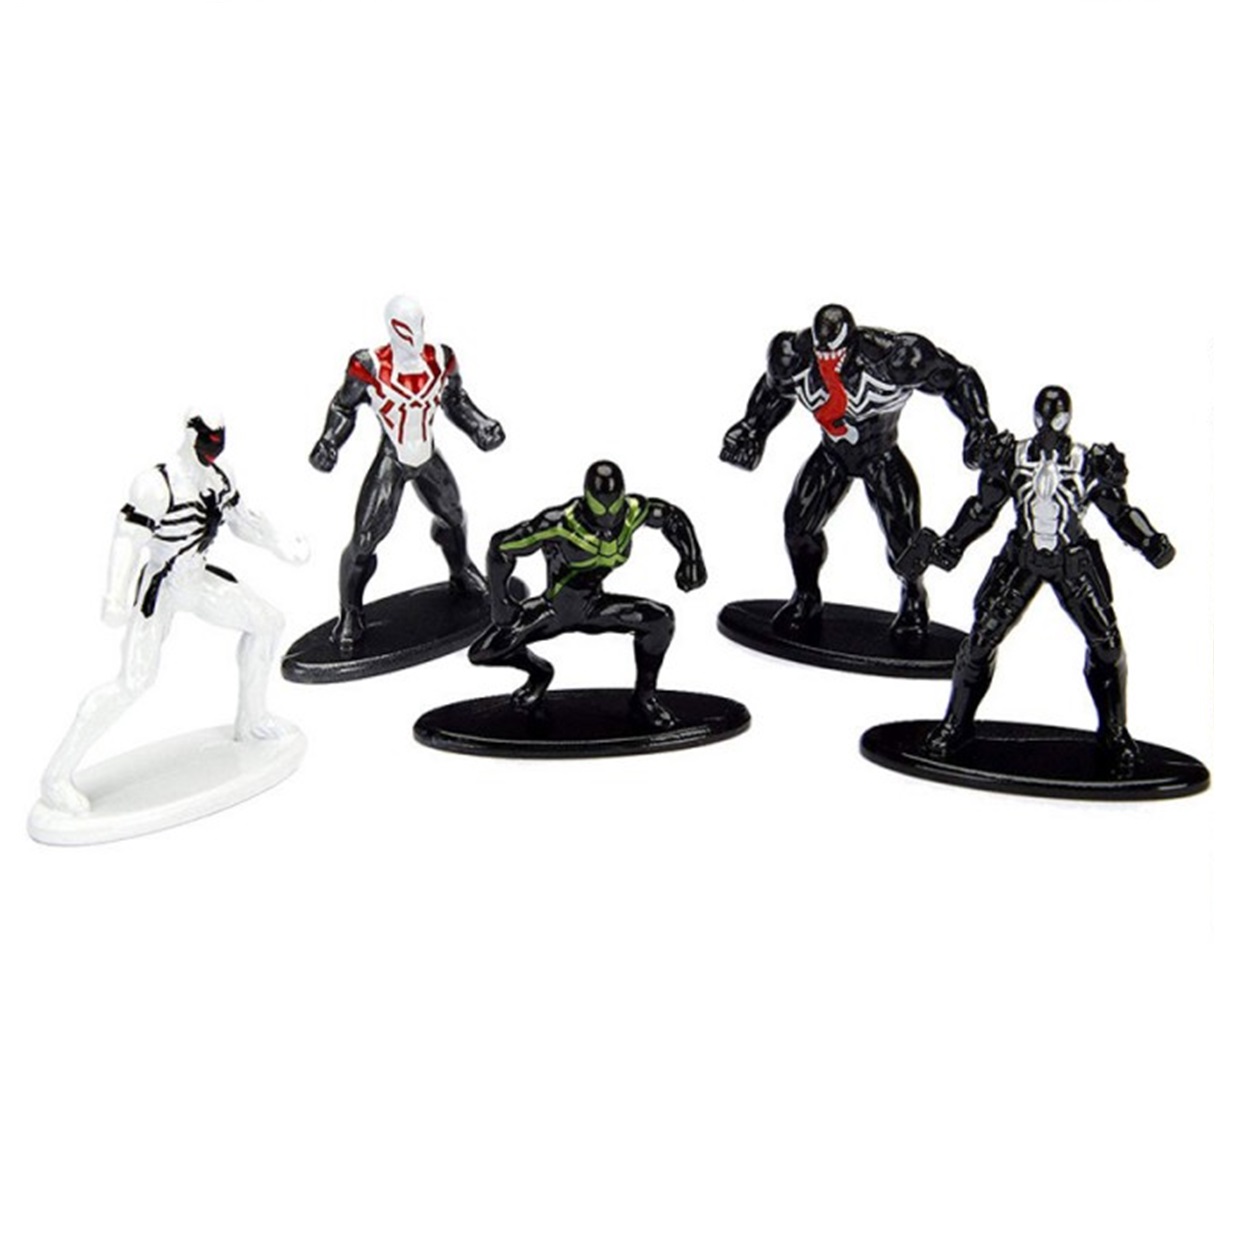 Nano Metalsfigs Figuras Spider Man 5pzs Pack Jada Toys Venom